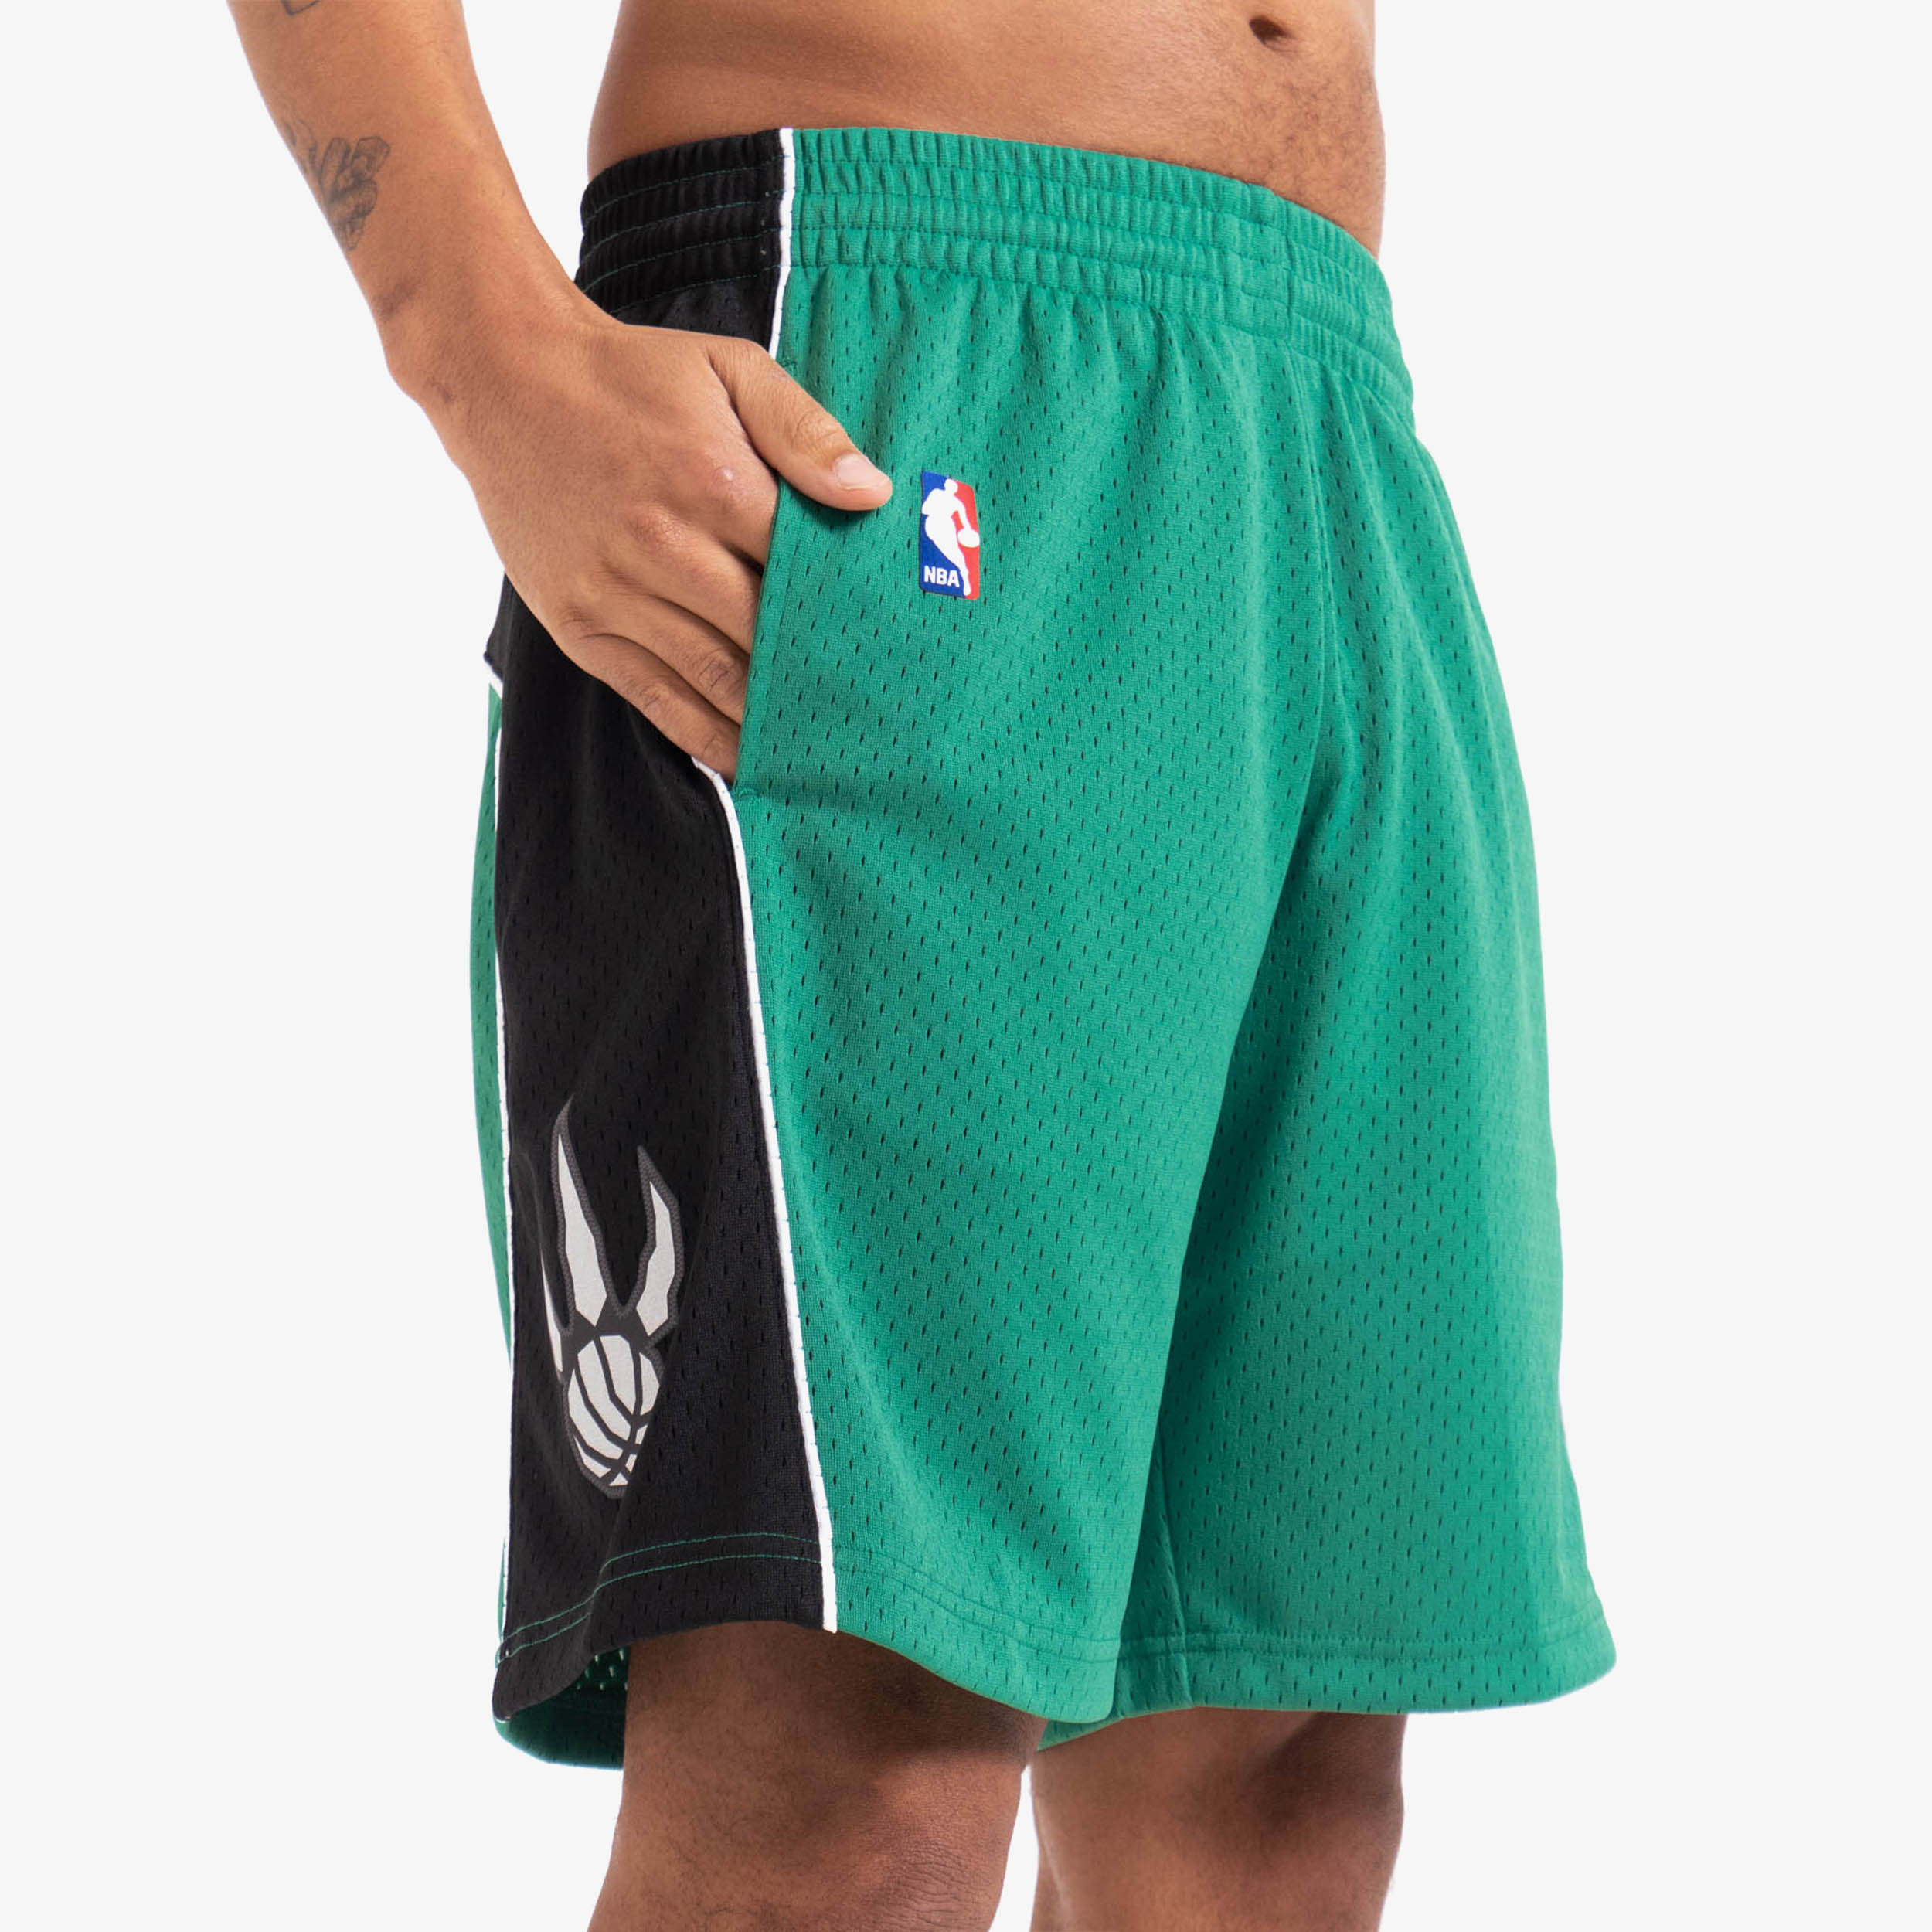 NBA Shorts - Toronto Raptors Shorts